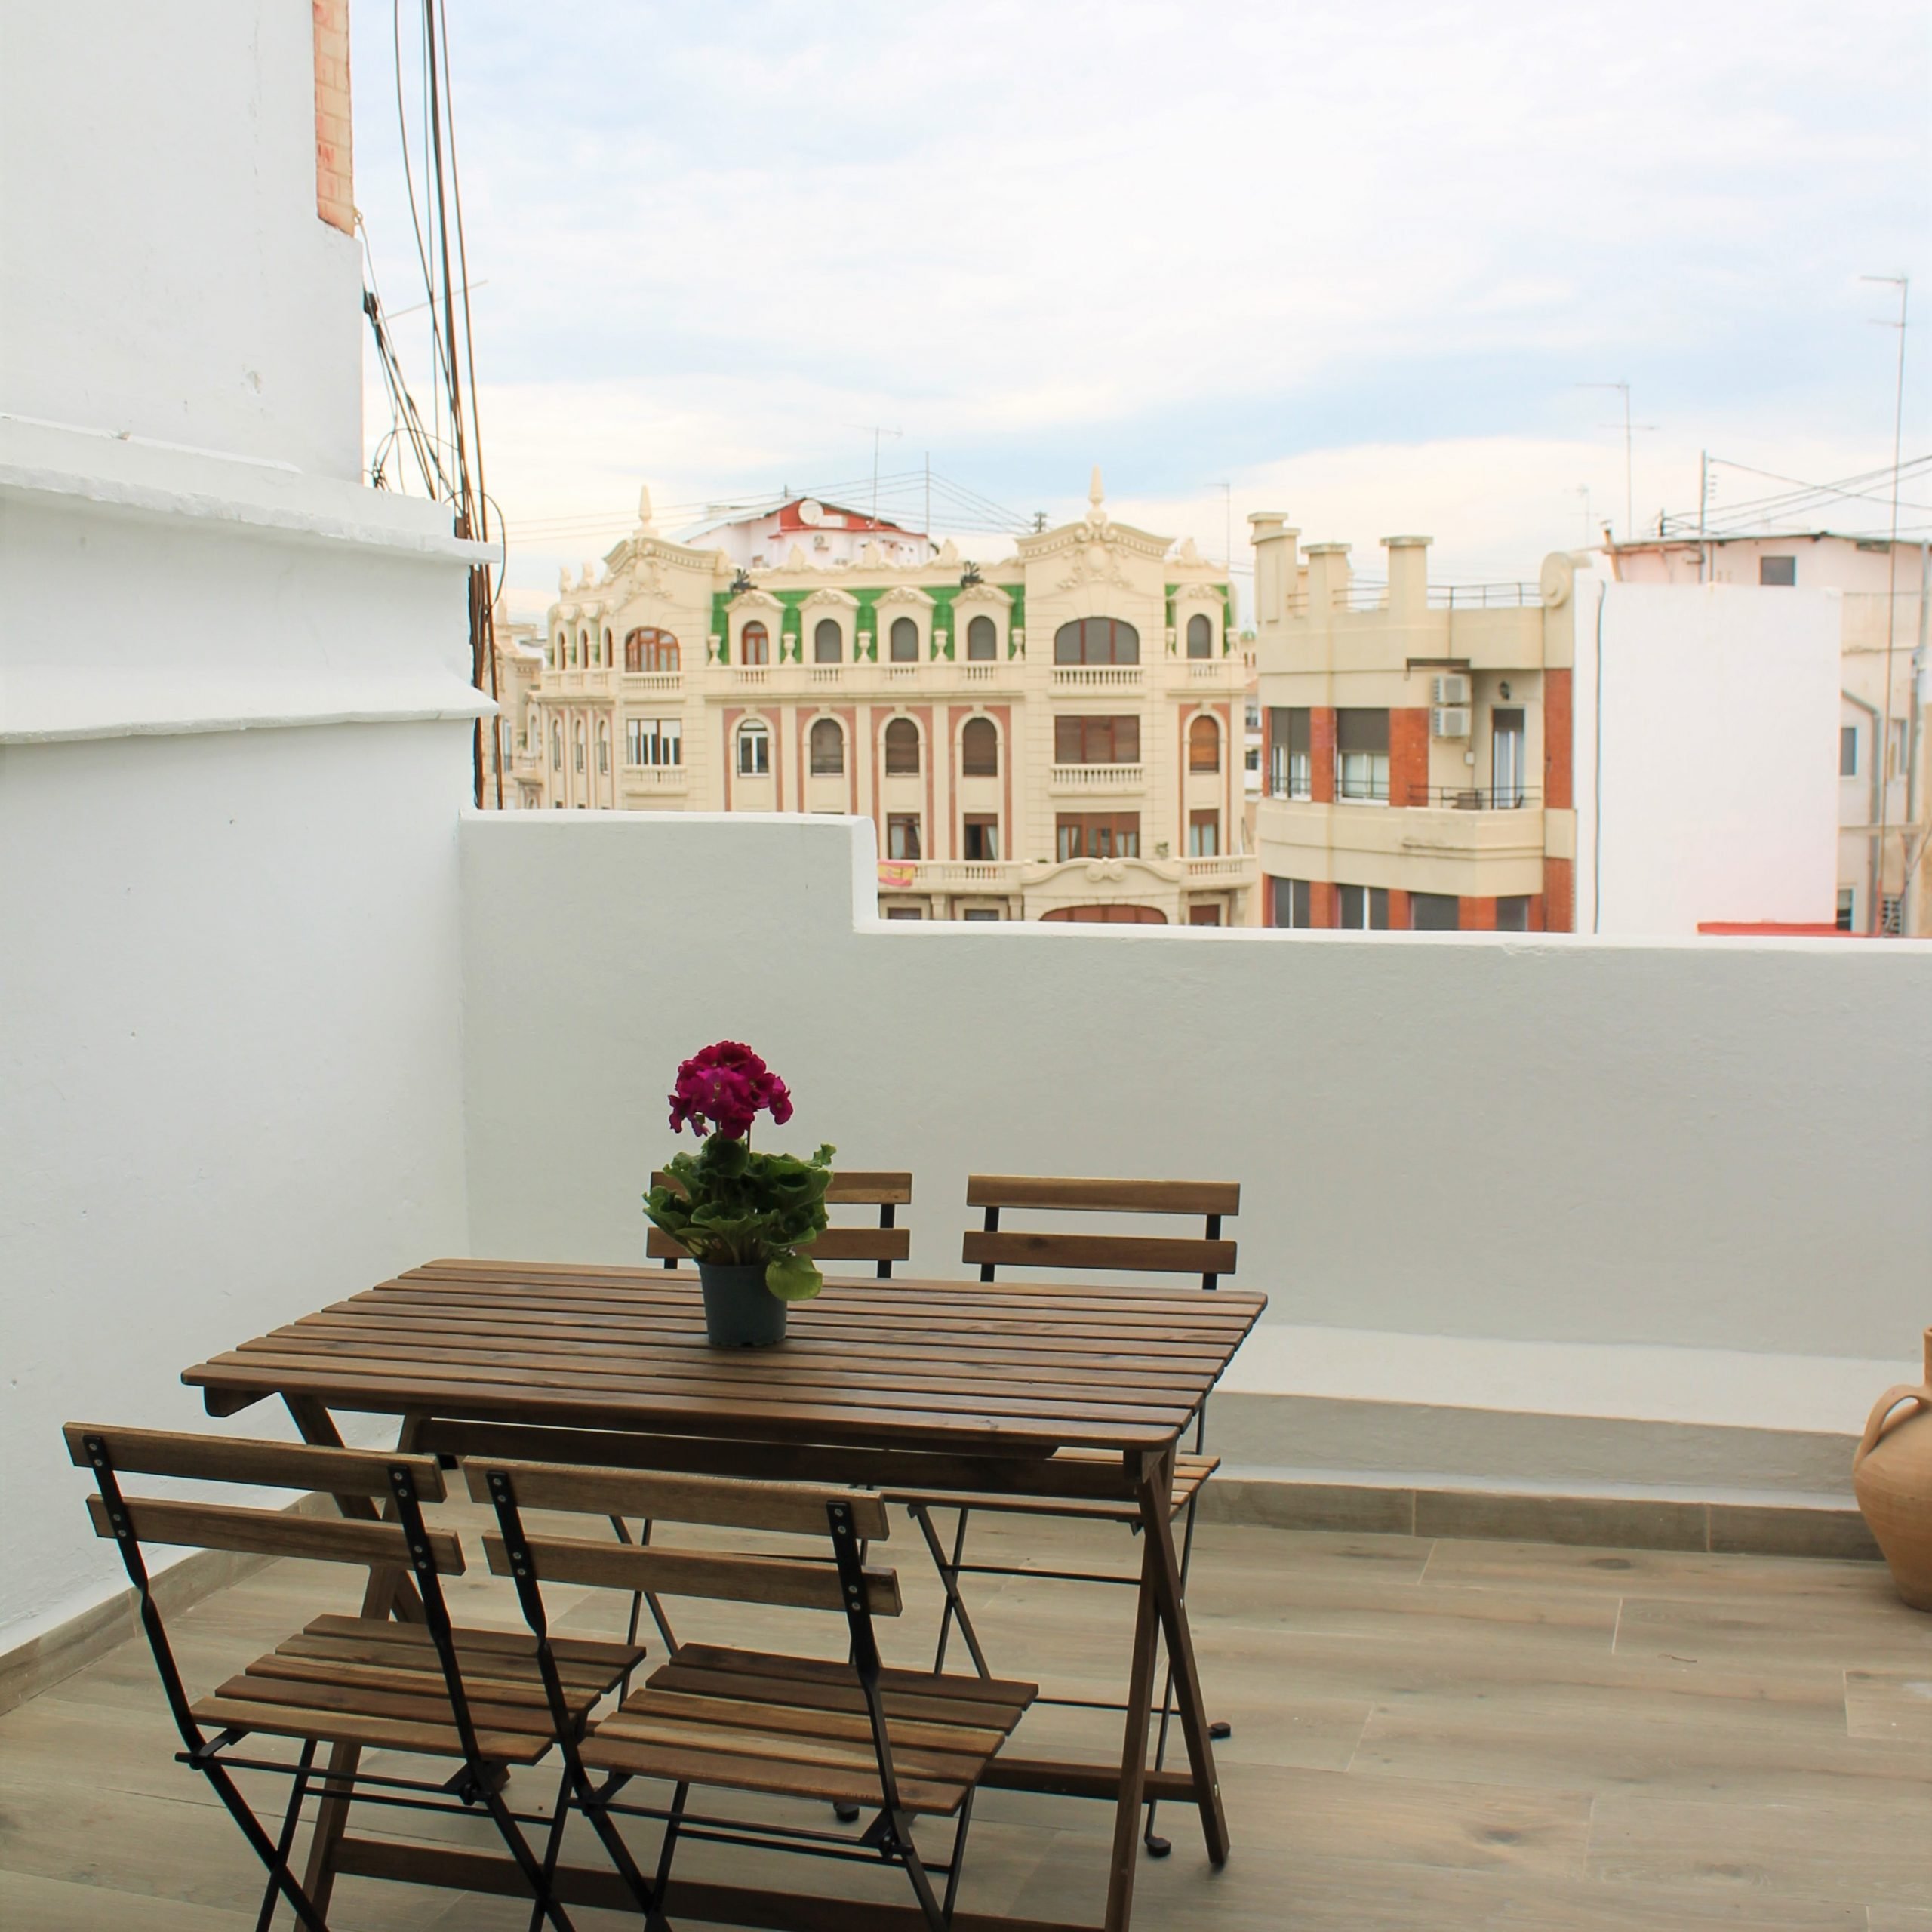 Reino 84 - New expat apartment in Valencia city centre